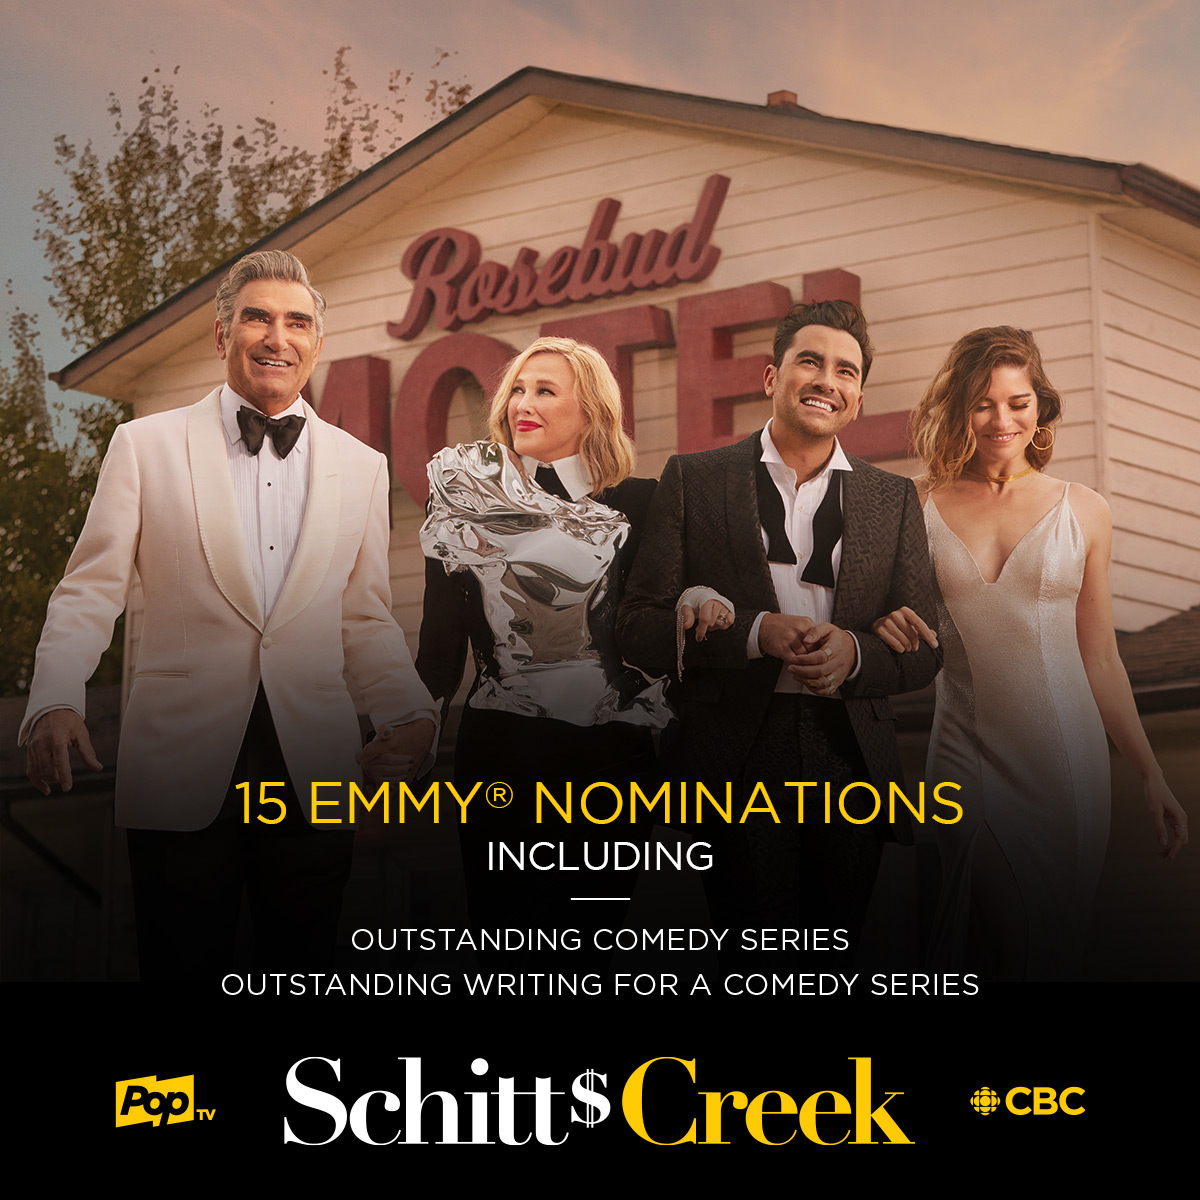 Schitt's Creek on Twitter: "Schitt's Creek has been nominated for ...